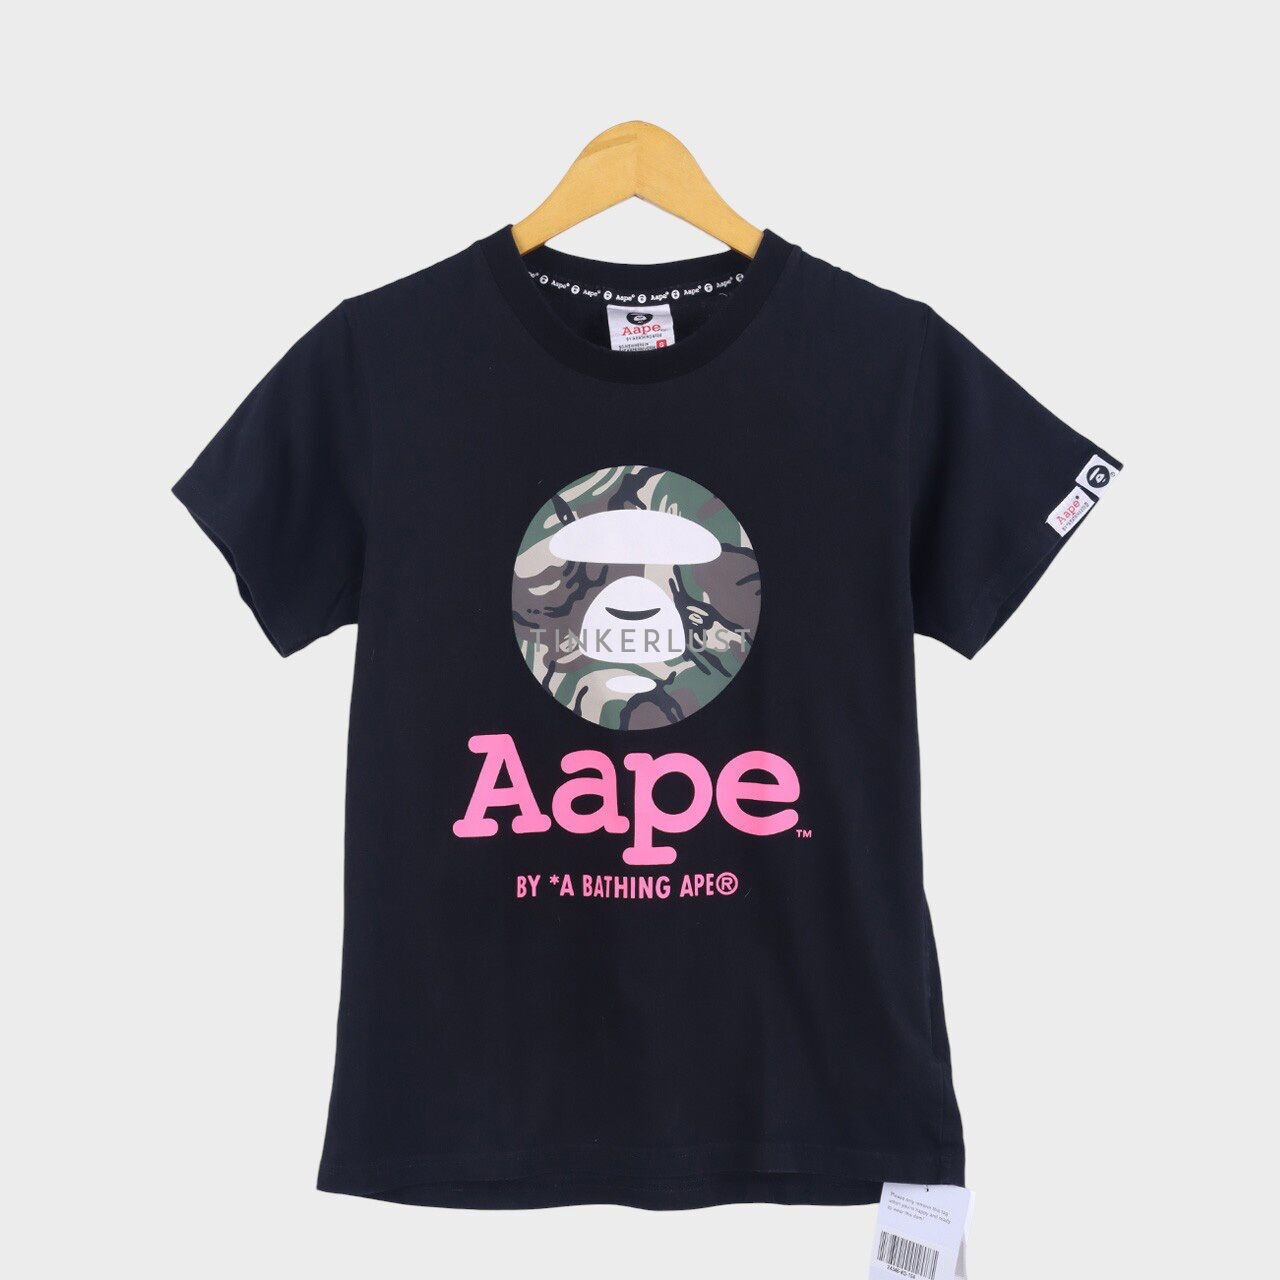 Aape By A Bathing Ape Black Graphic Tshirt